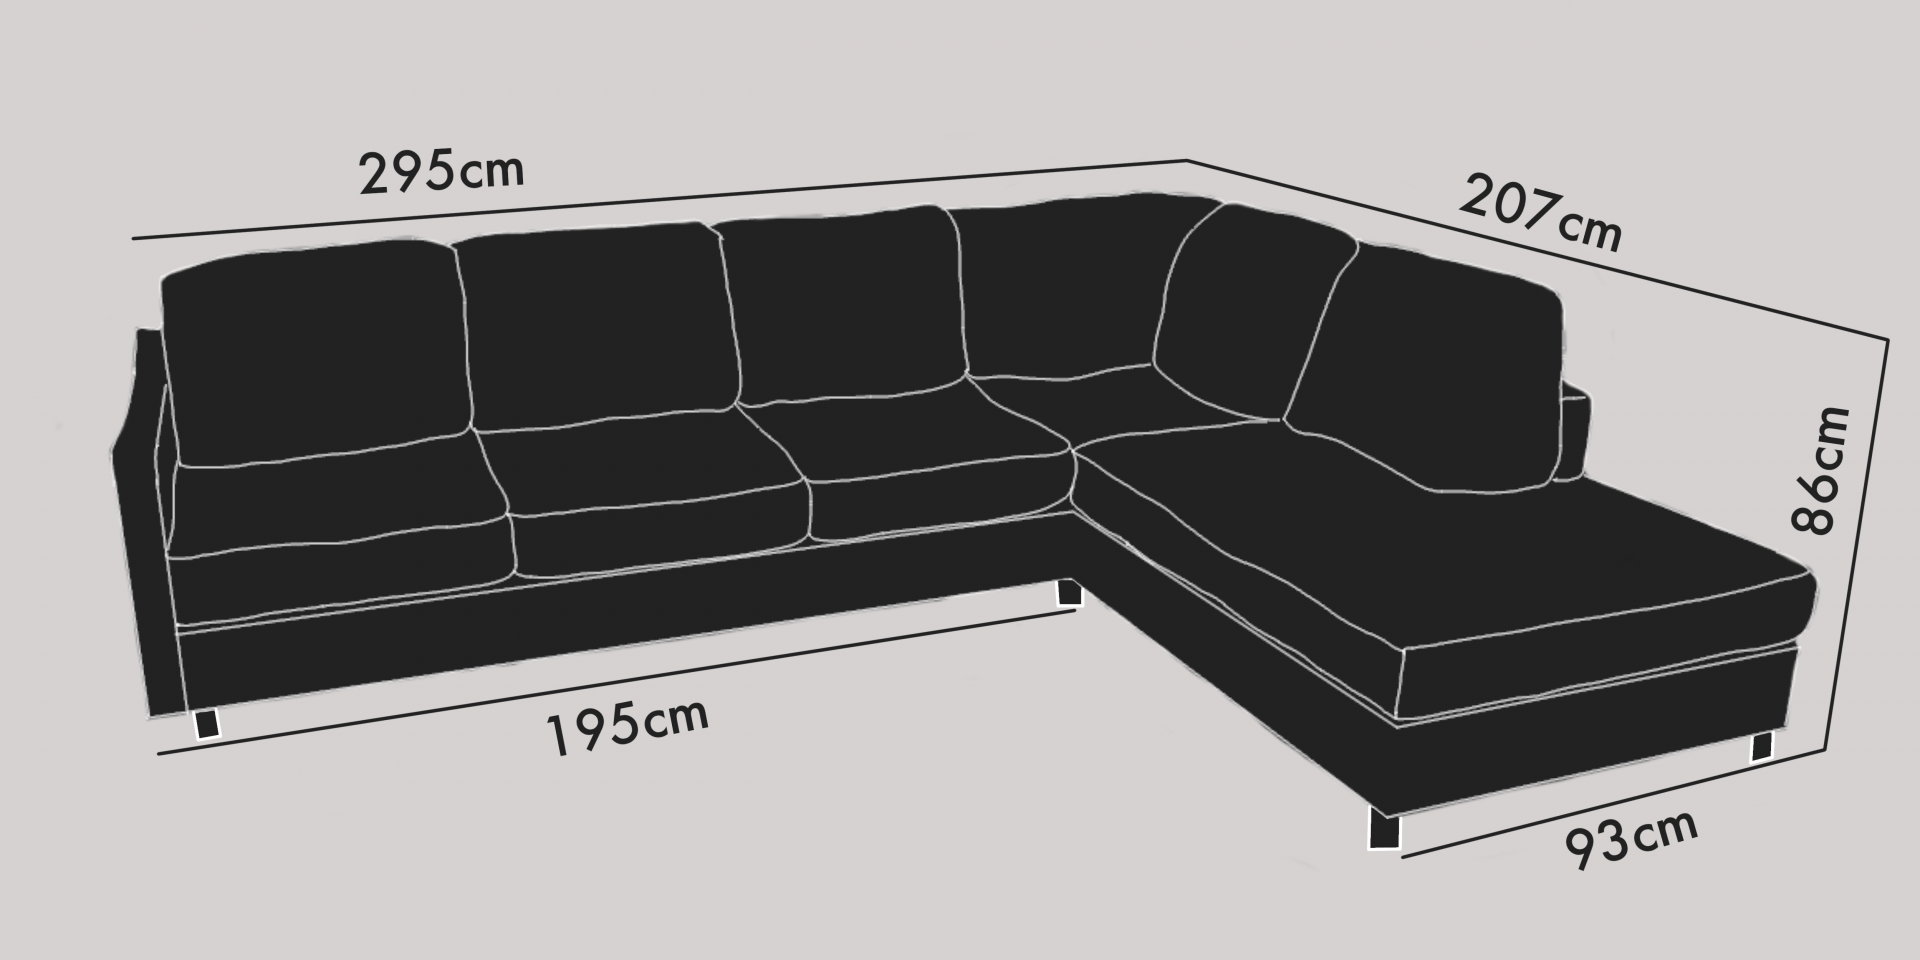 3-sits soffa large m öppet avslut höger